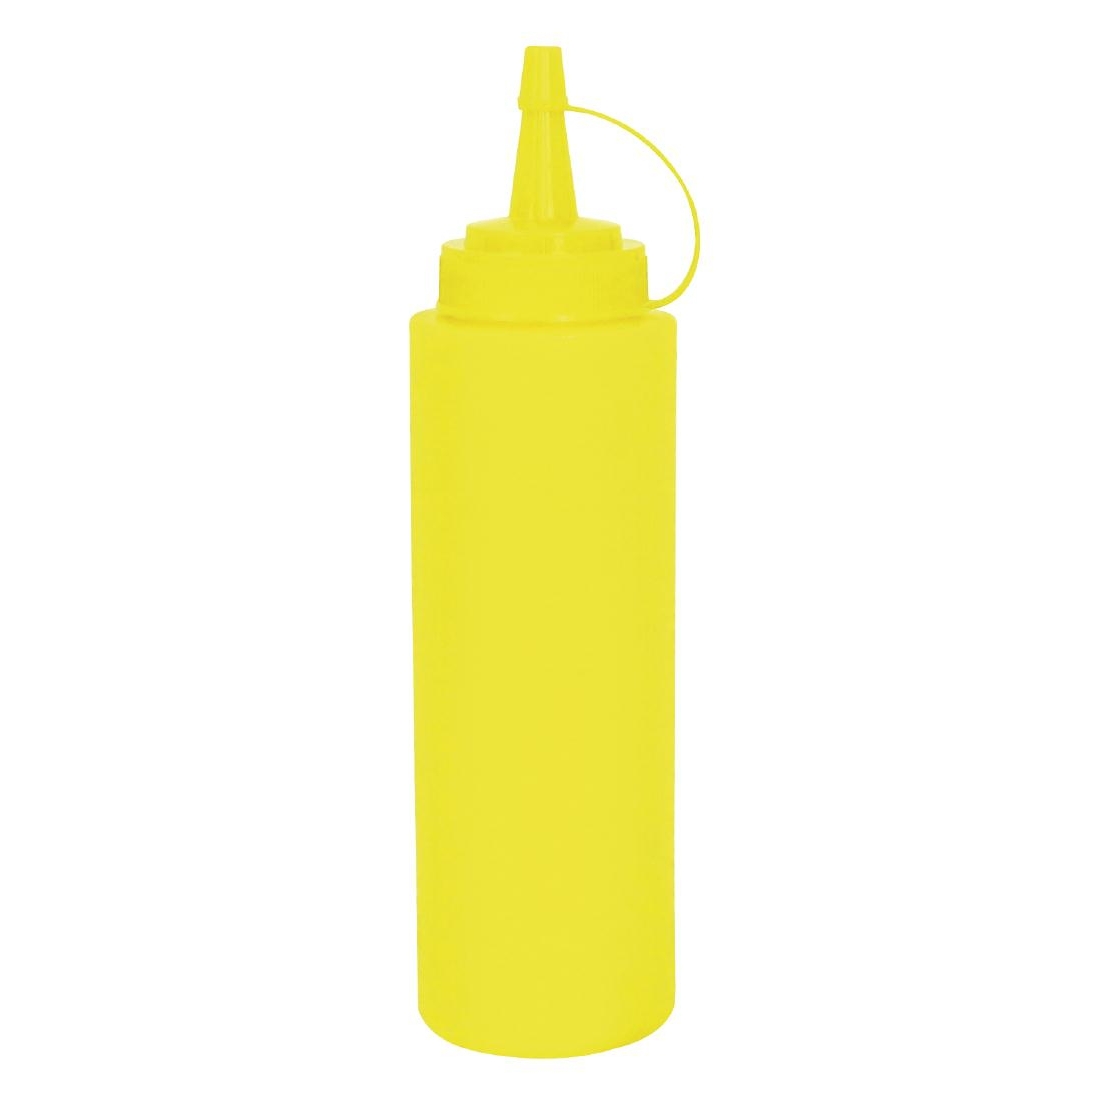 Vogue Yellow Squeeze Sauce Bottle 24oz